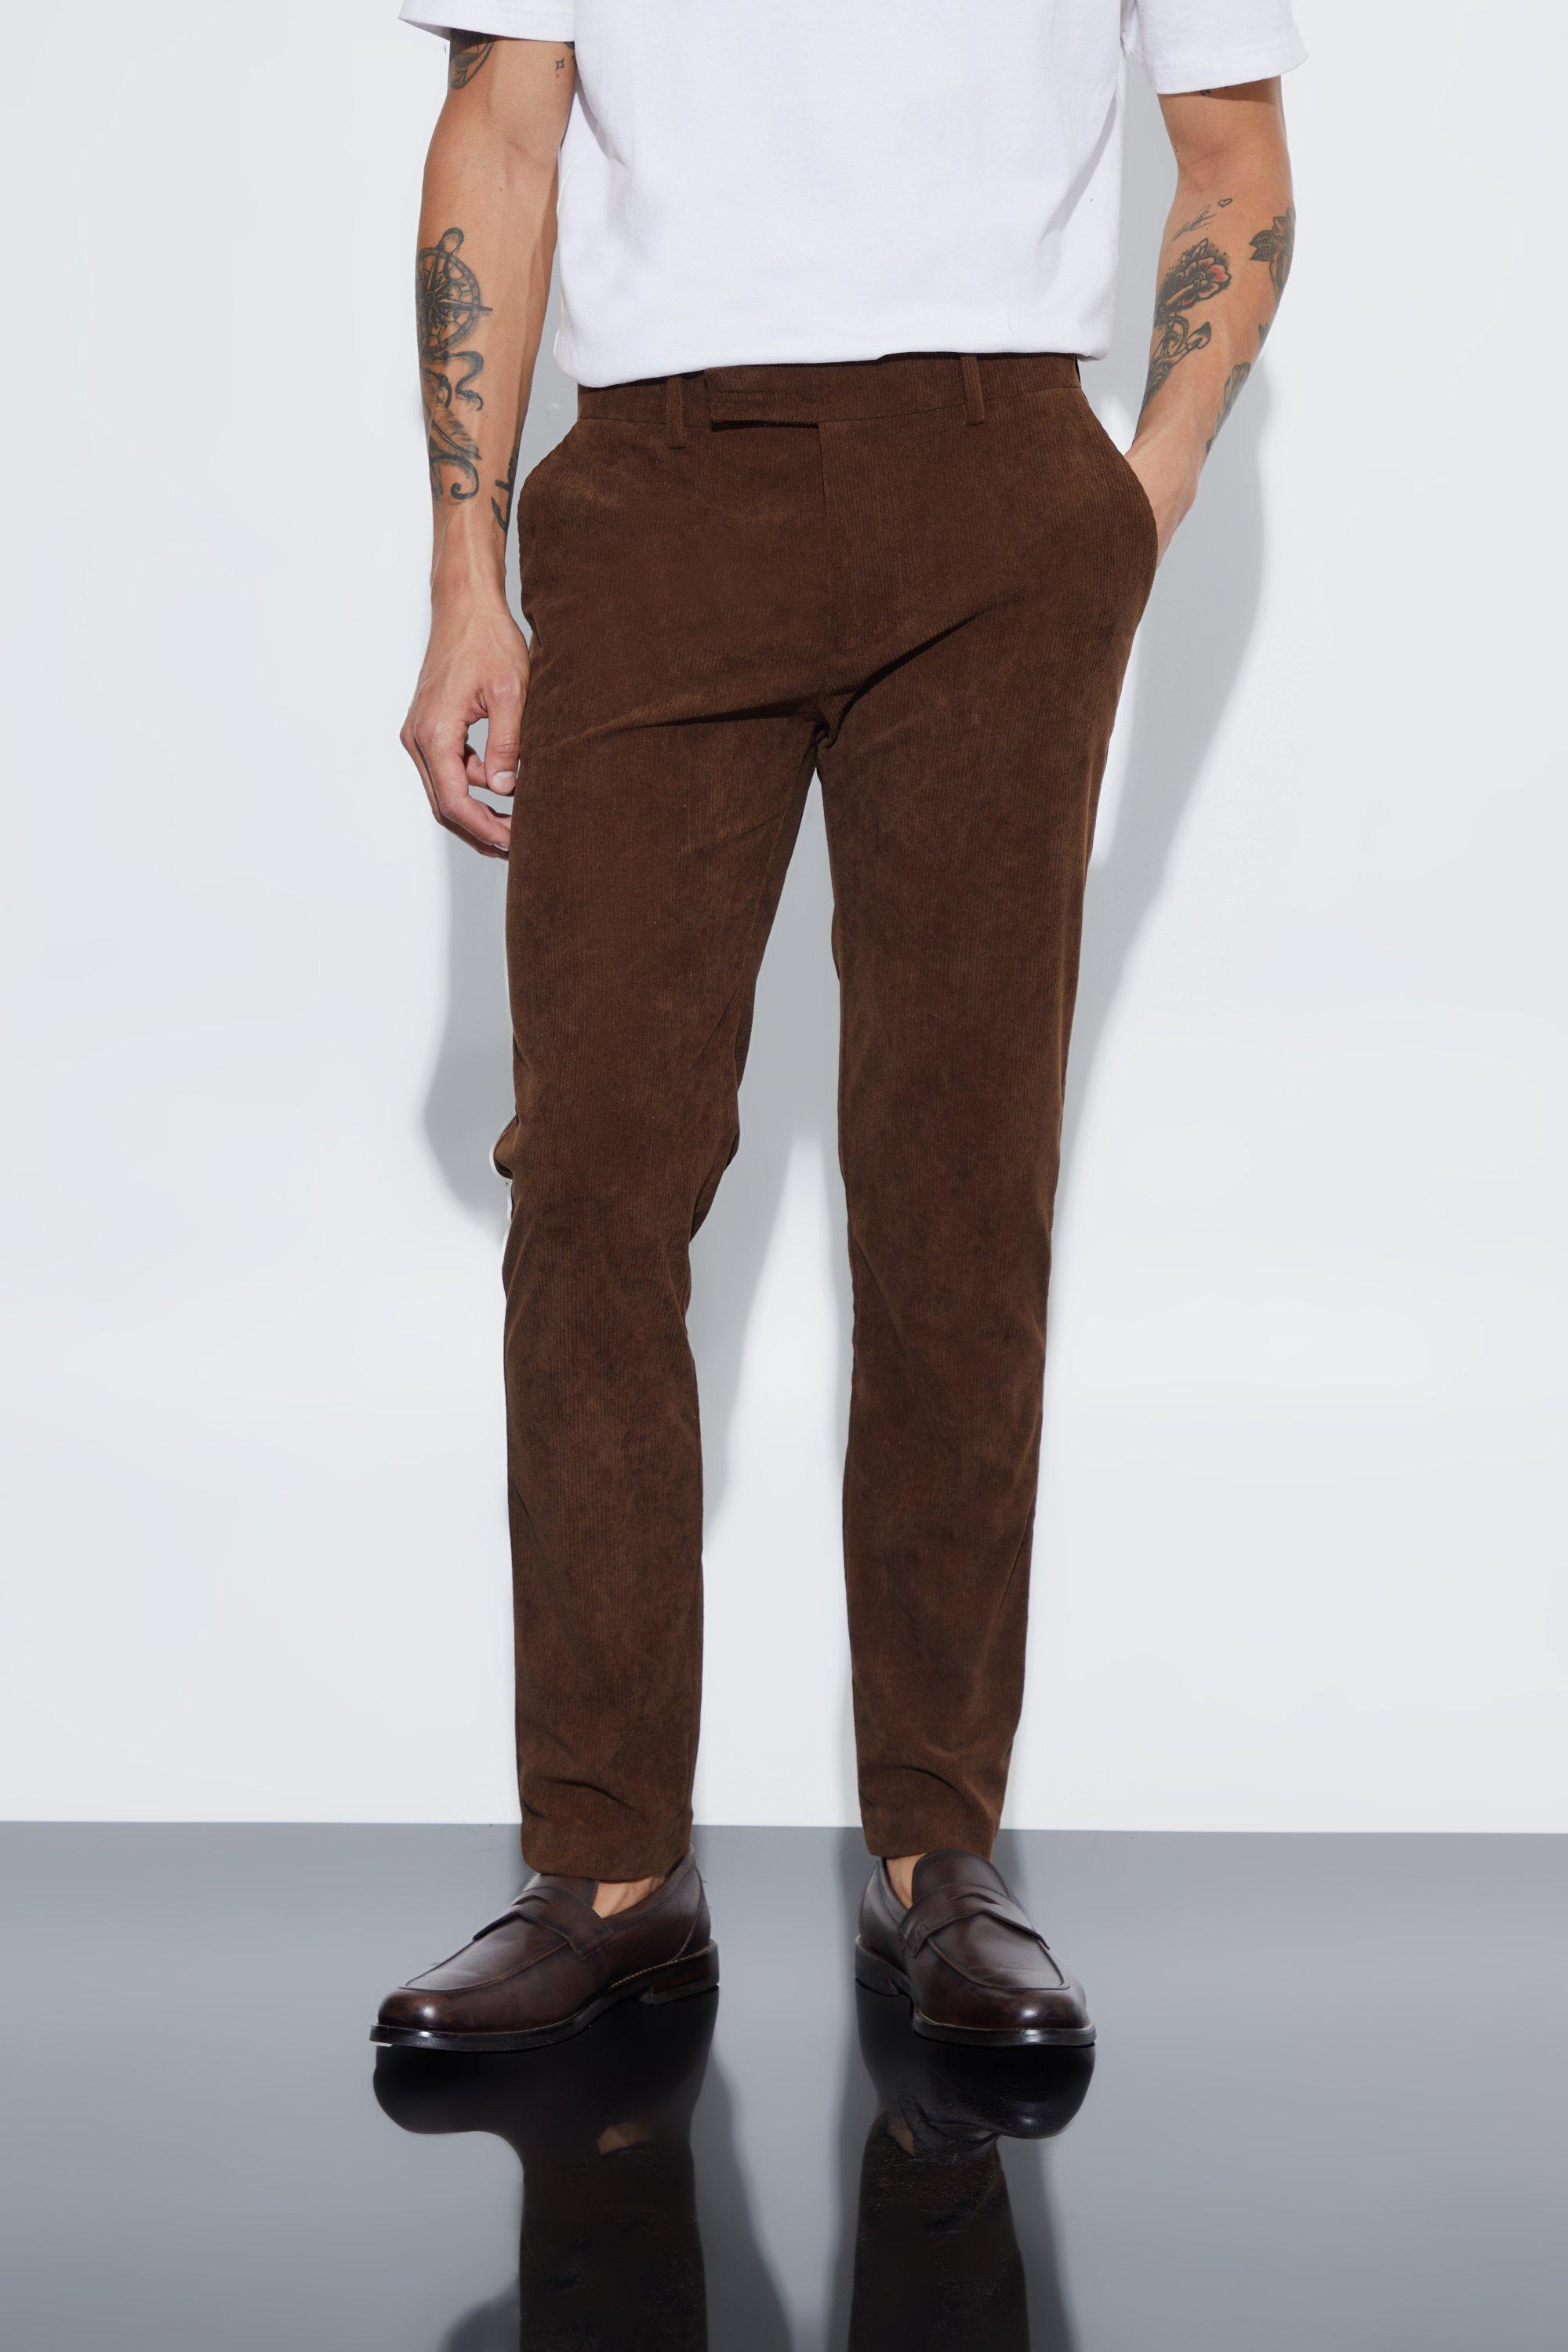 pantalon de tailleur skinny homme - brun - 28, brun